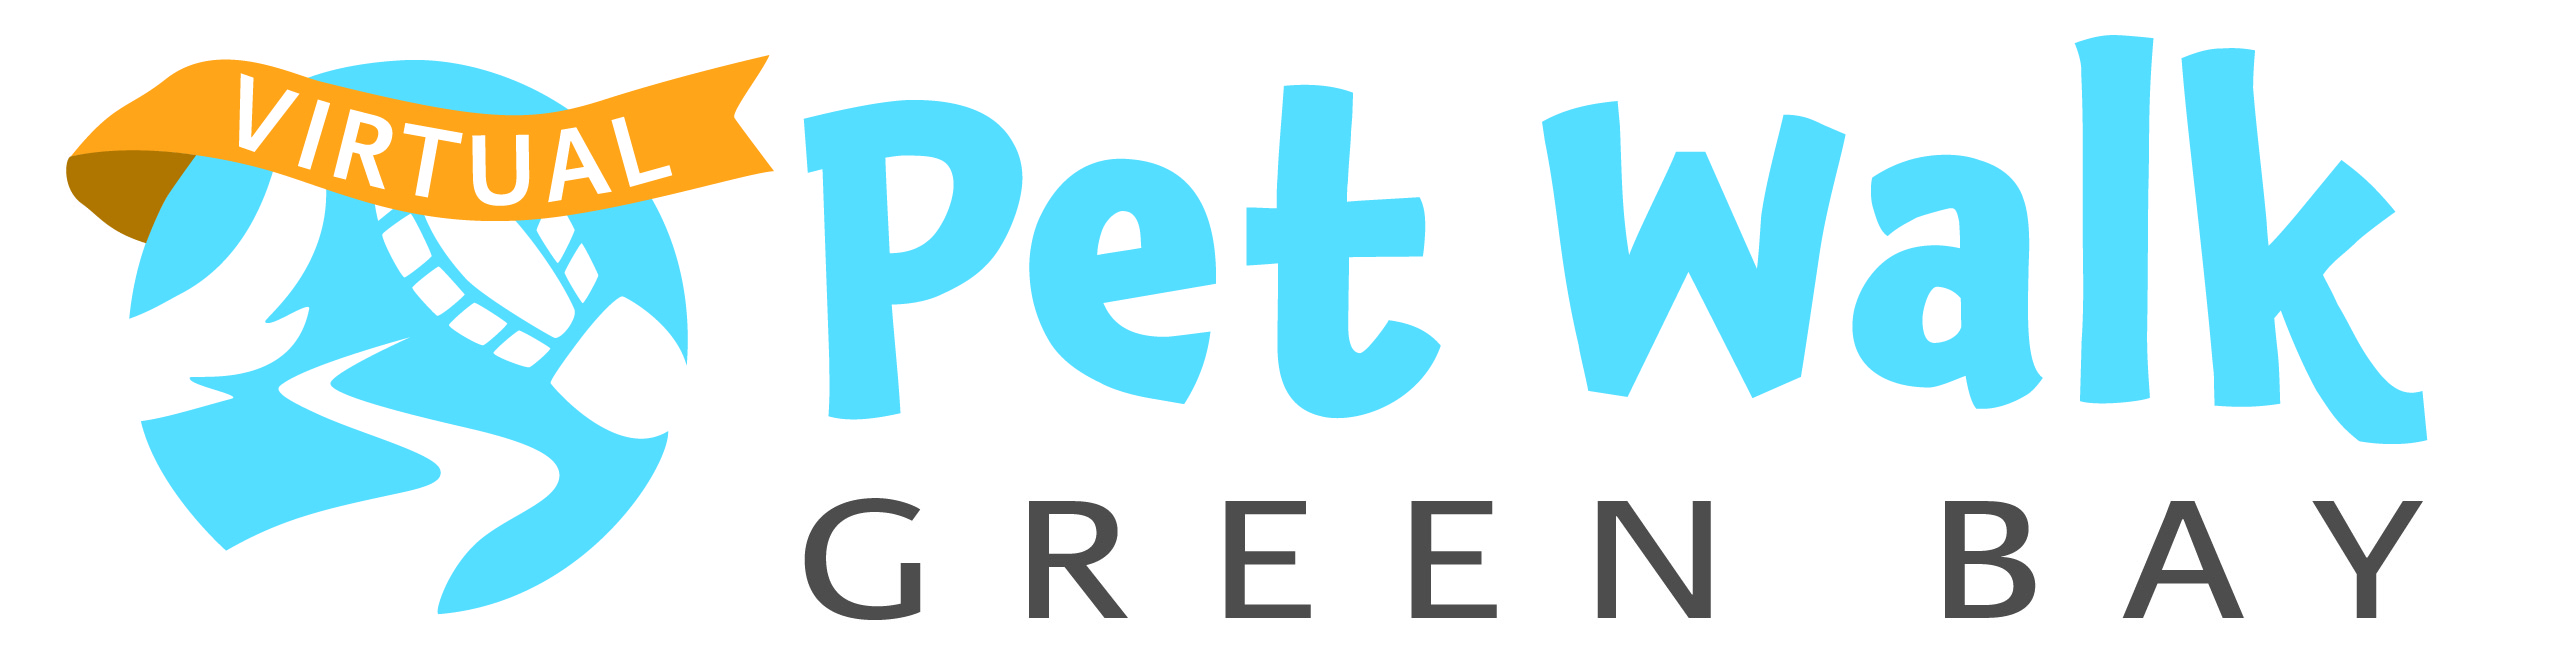 2020 Virtual Pet Walk GB